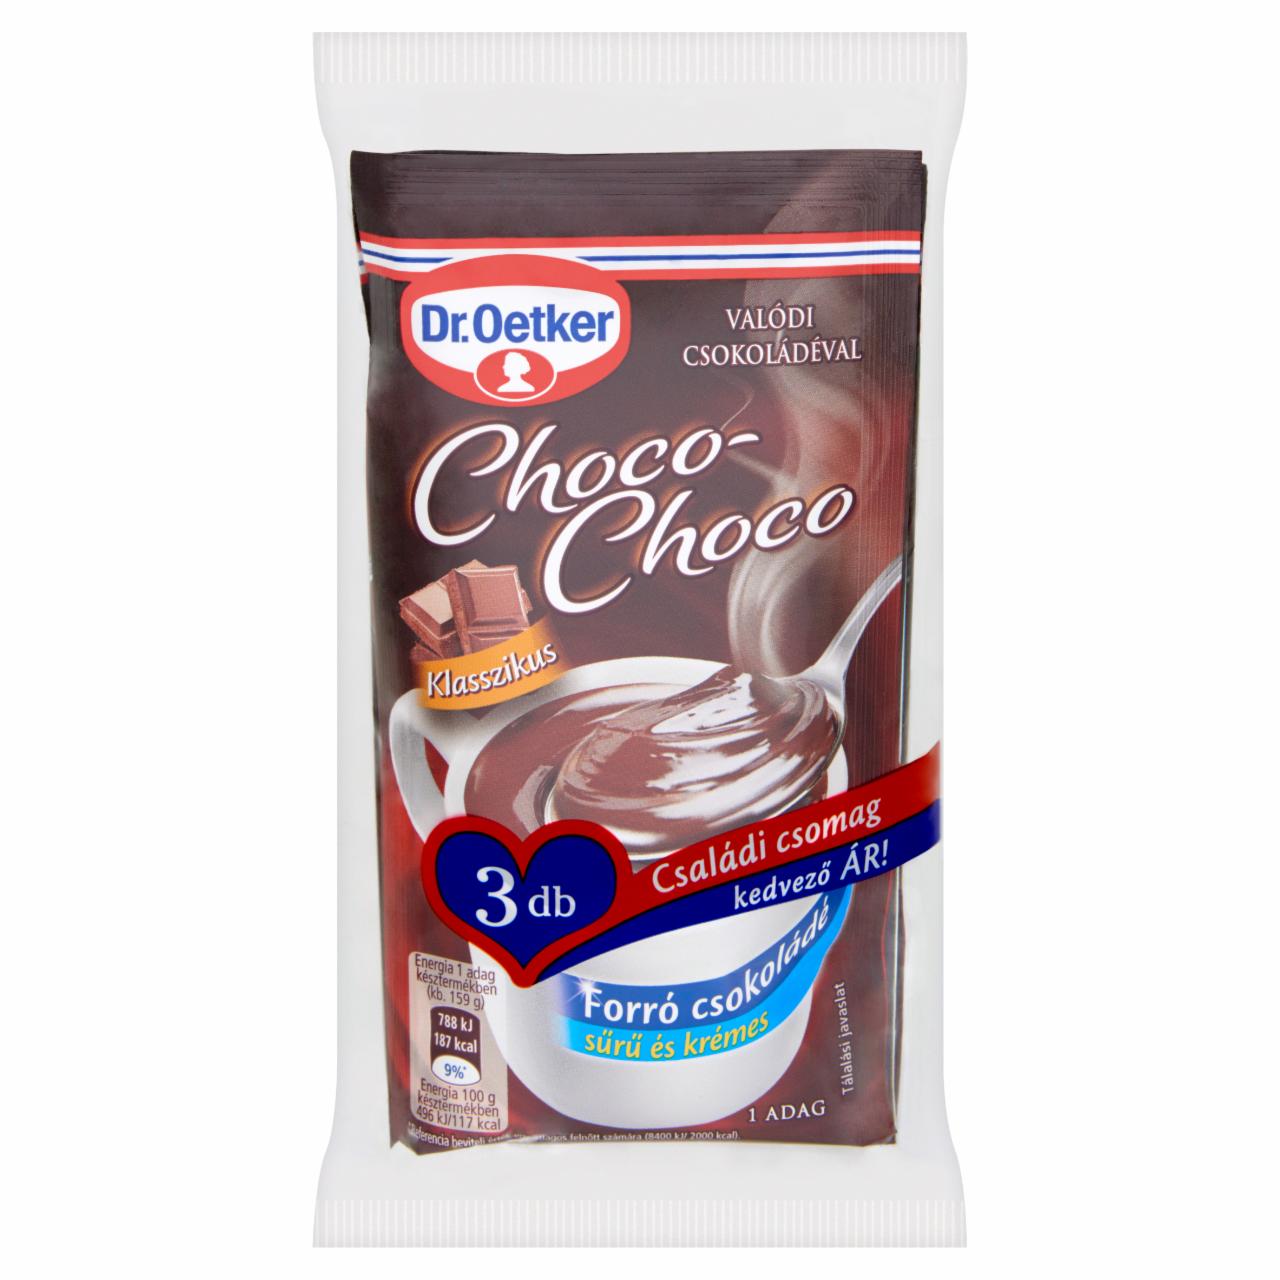 Képek - Dr. Oetker Choco-Choco klasszikus forró csokoládé italpor 3 x 34 g